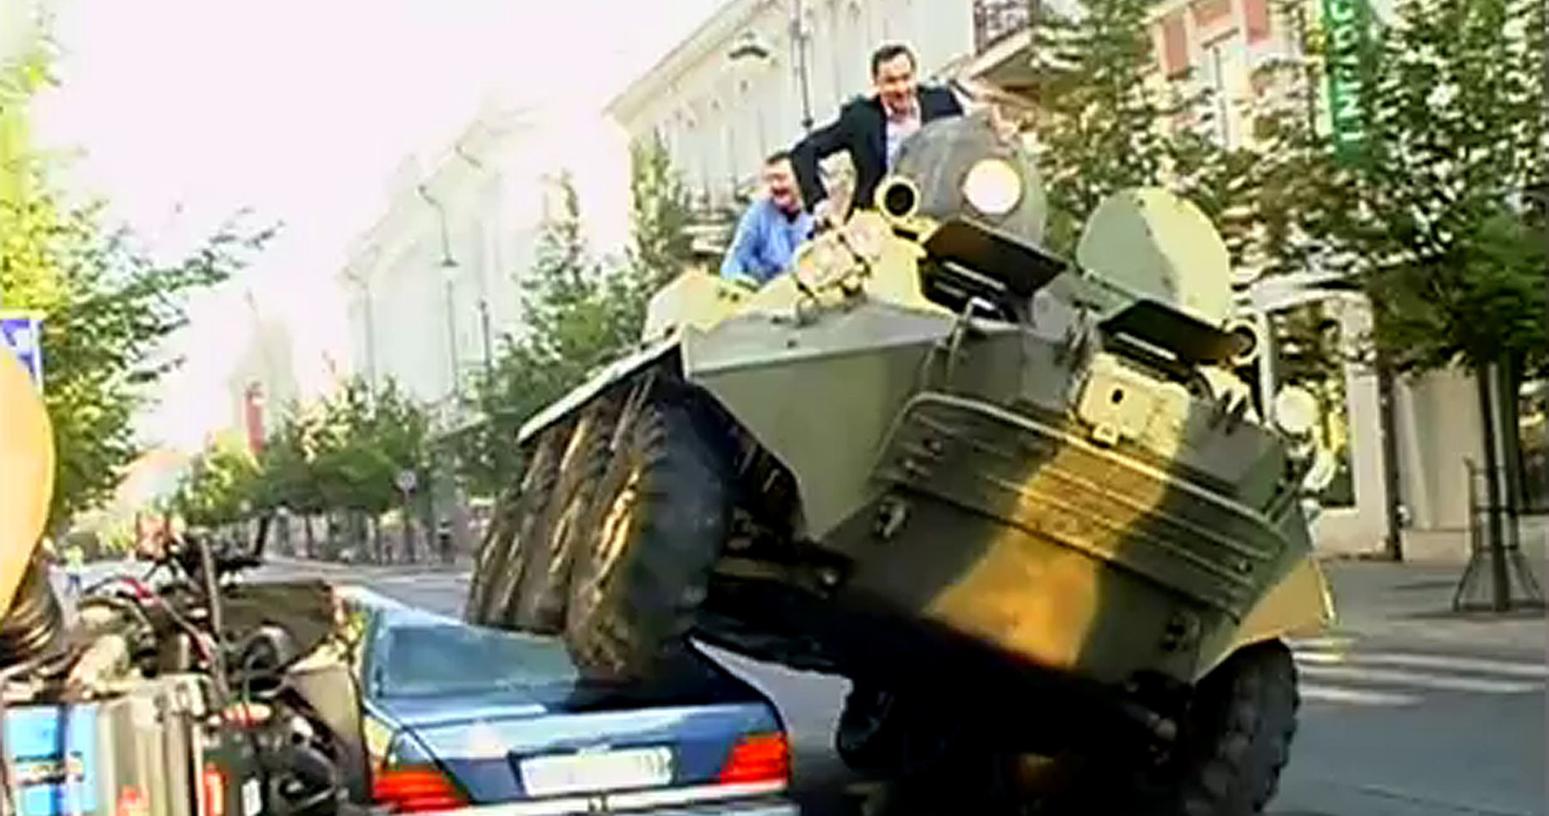 PR-Aktion mit Panzer: Bürgermeister walzt Parksünder nieder